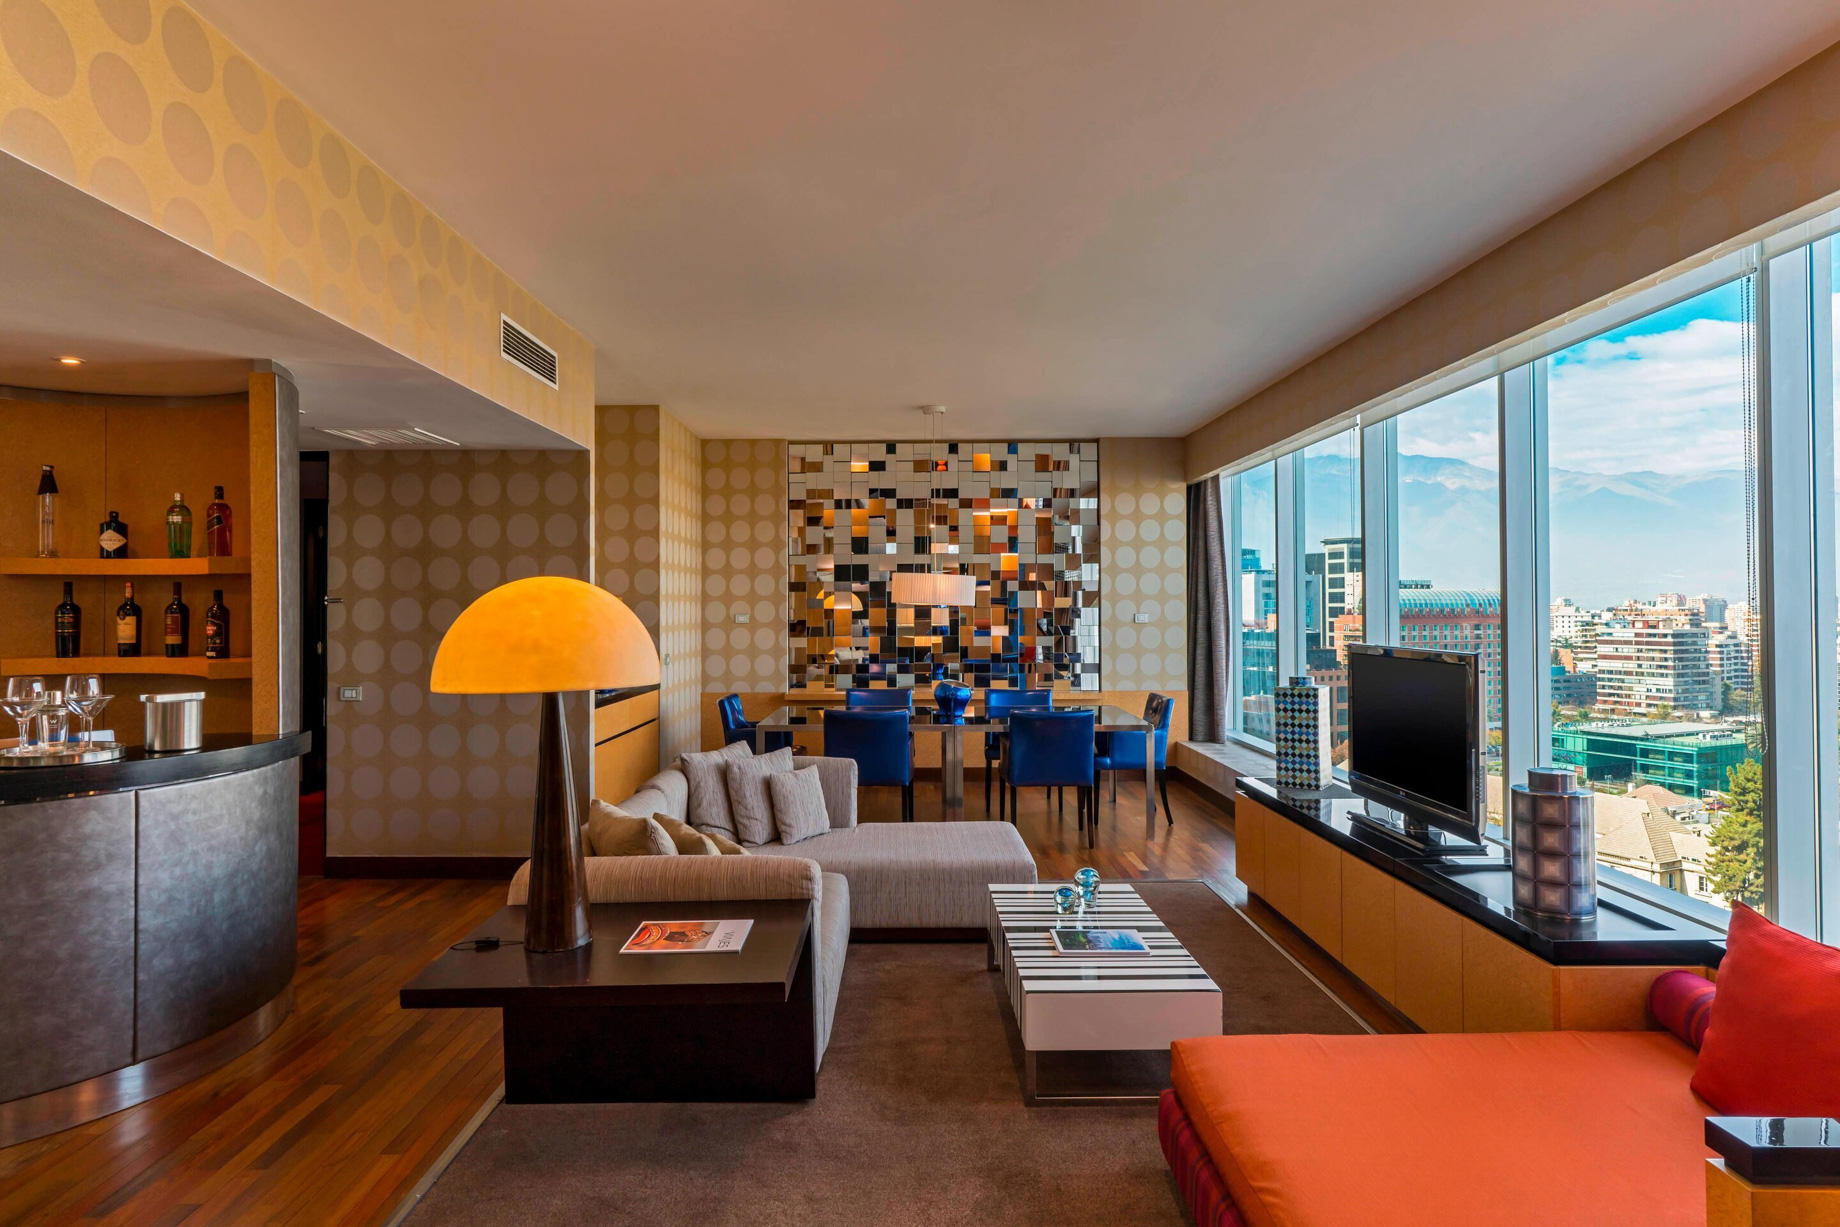 W Santiago Hotel - Santiago, Chile - Wow Suite Living Room And Mini Bar